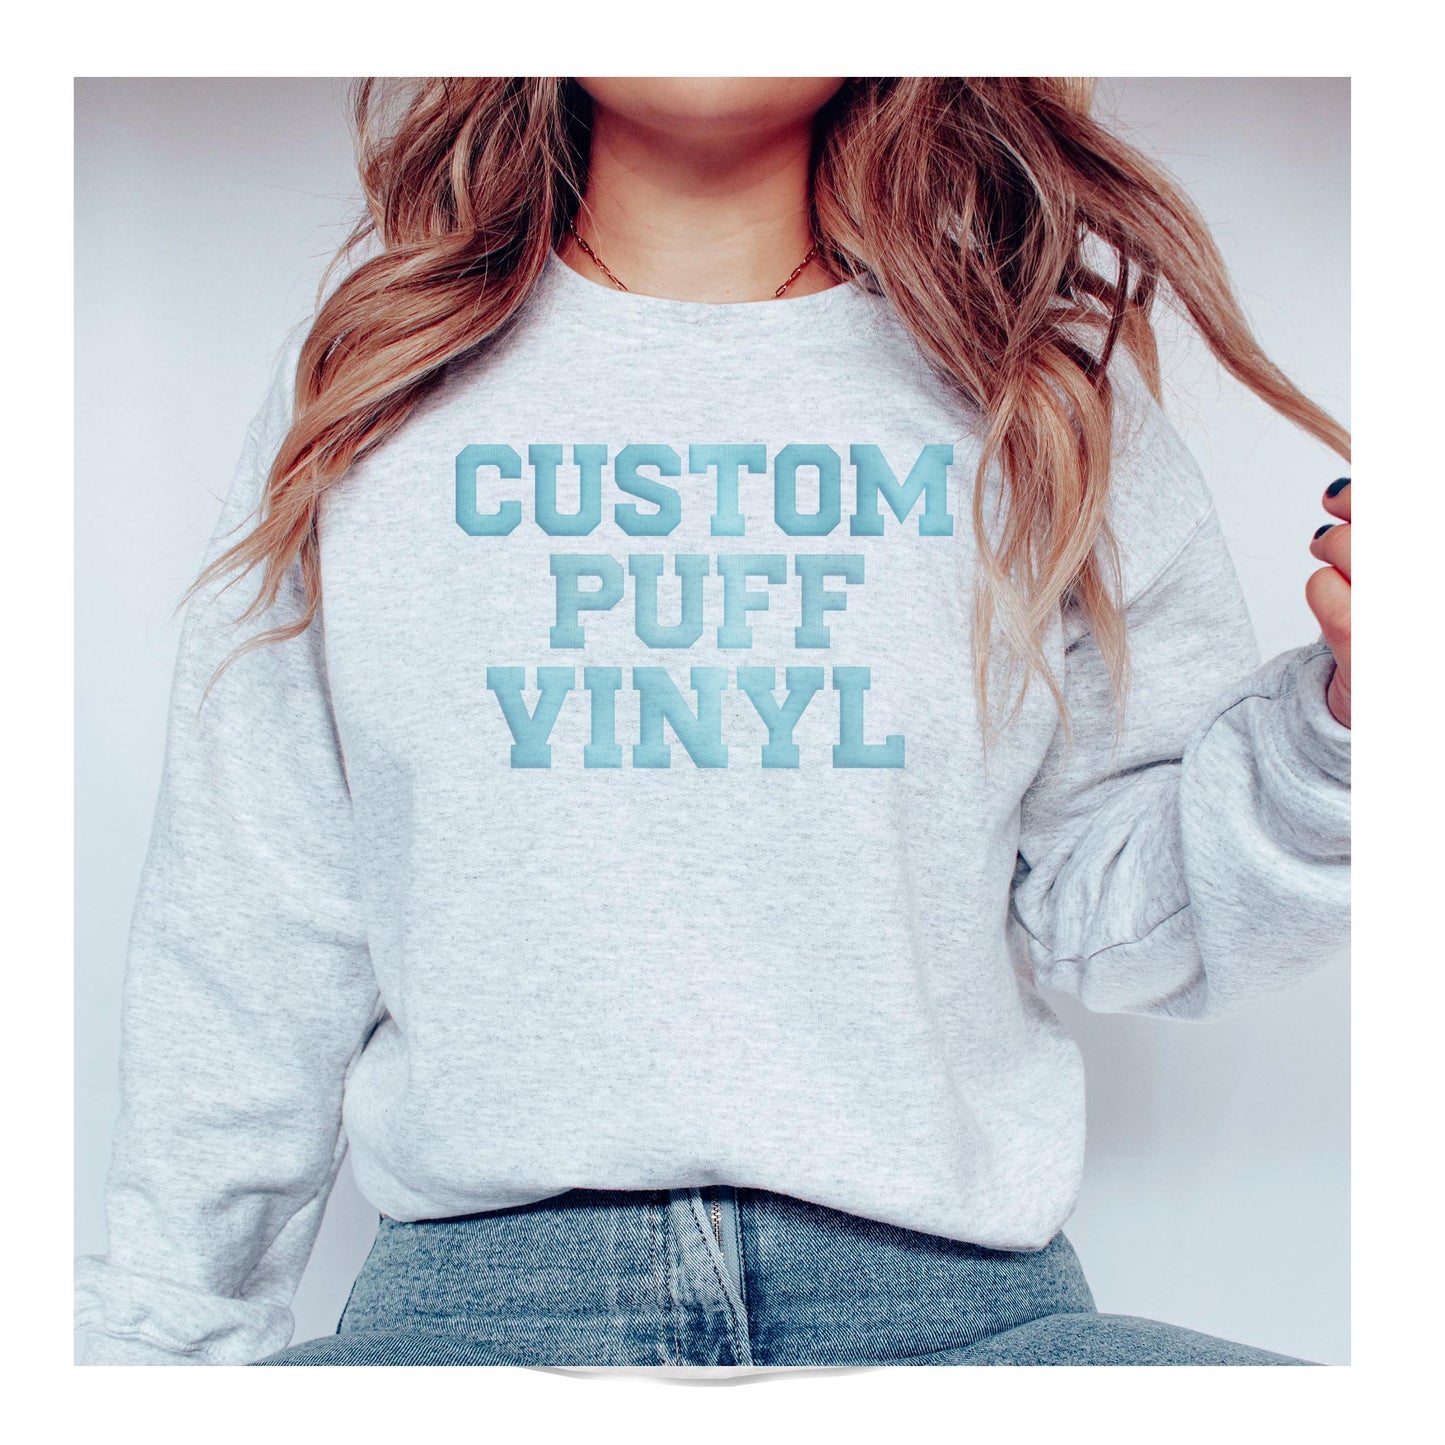 Custom Puff Vinyl Pre-order